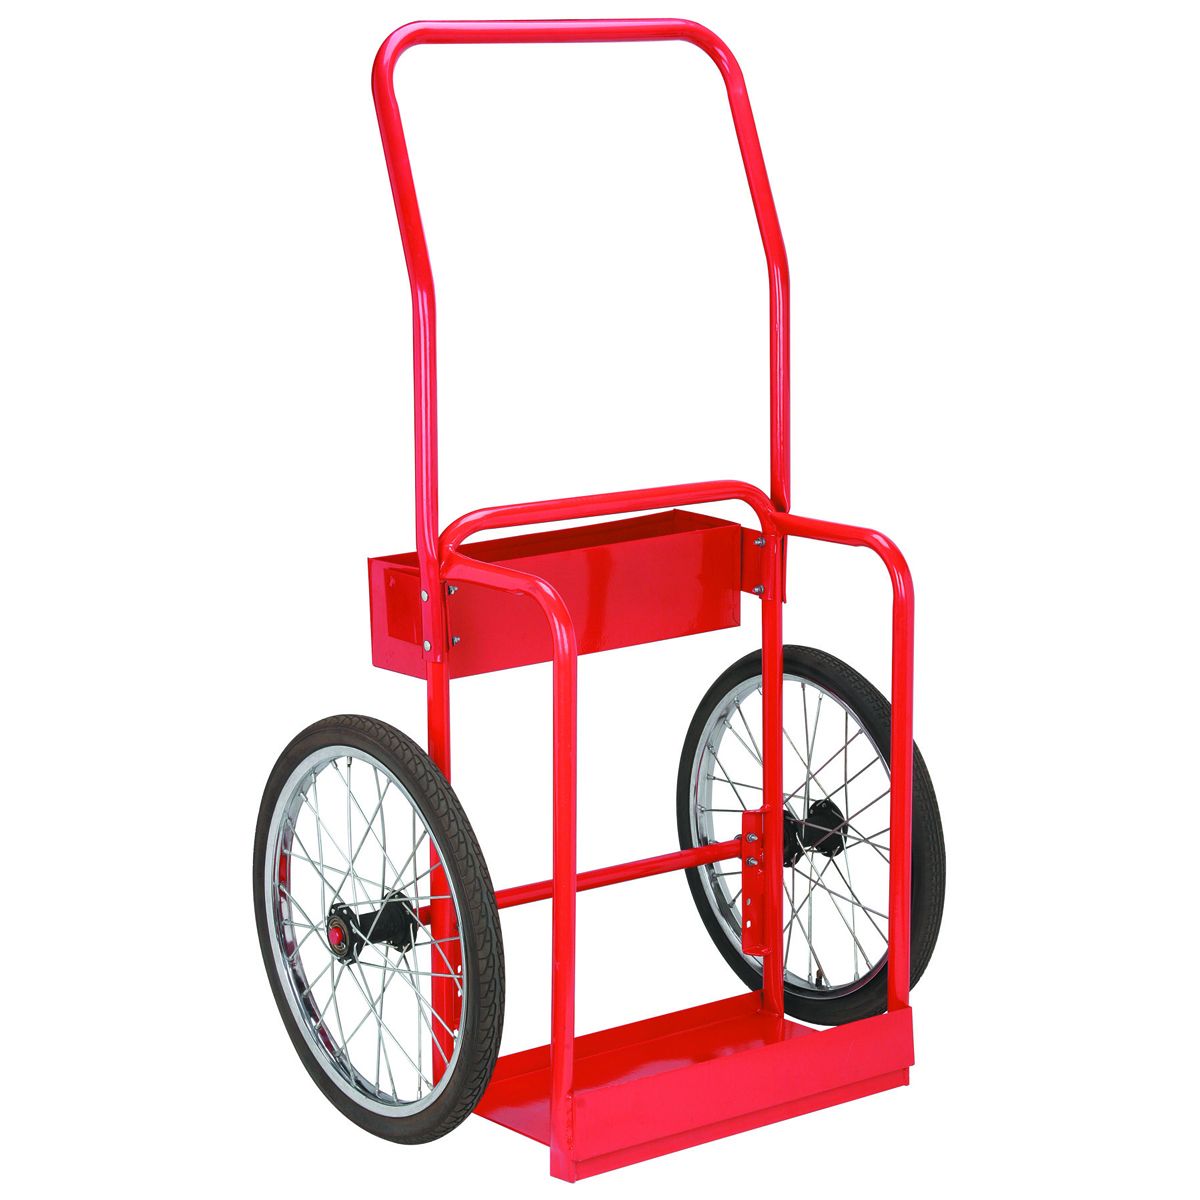 CHICAGO ELECTRIC WELDING Welding Cart - Red